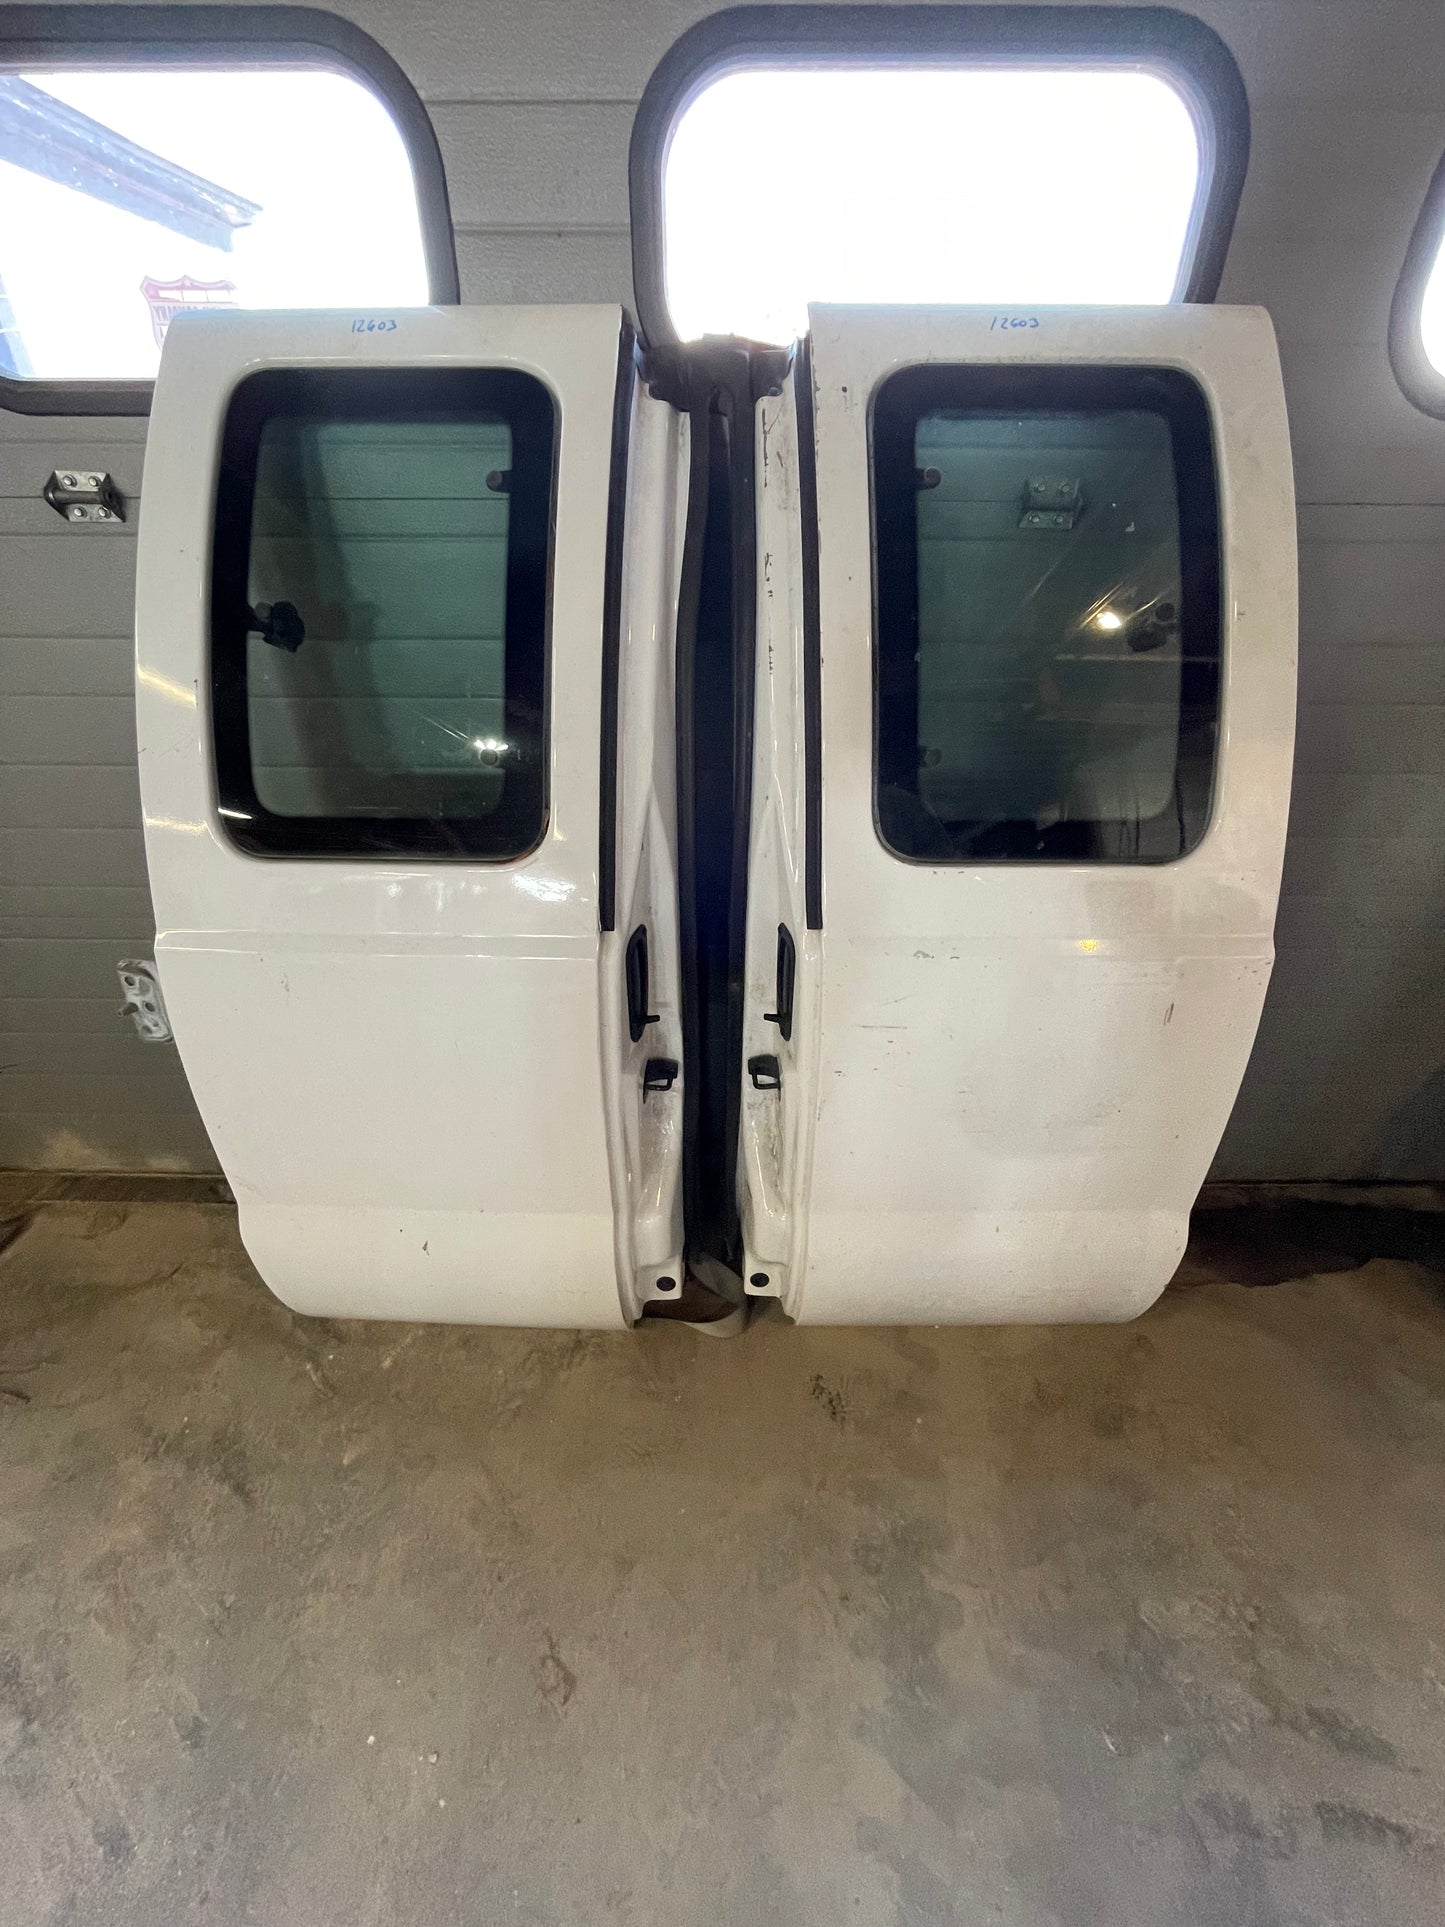 08-16 Superduty rear supercab doors (fit 99-16) #12603